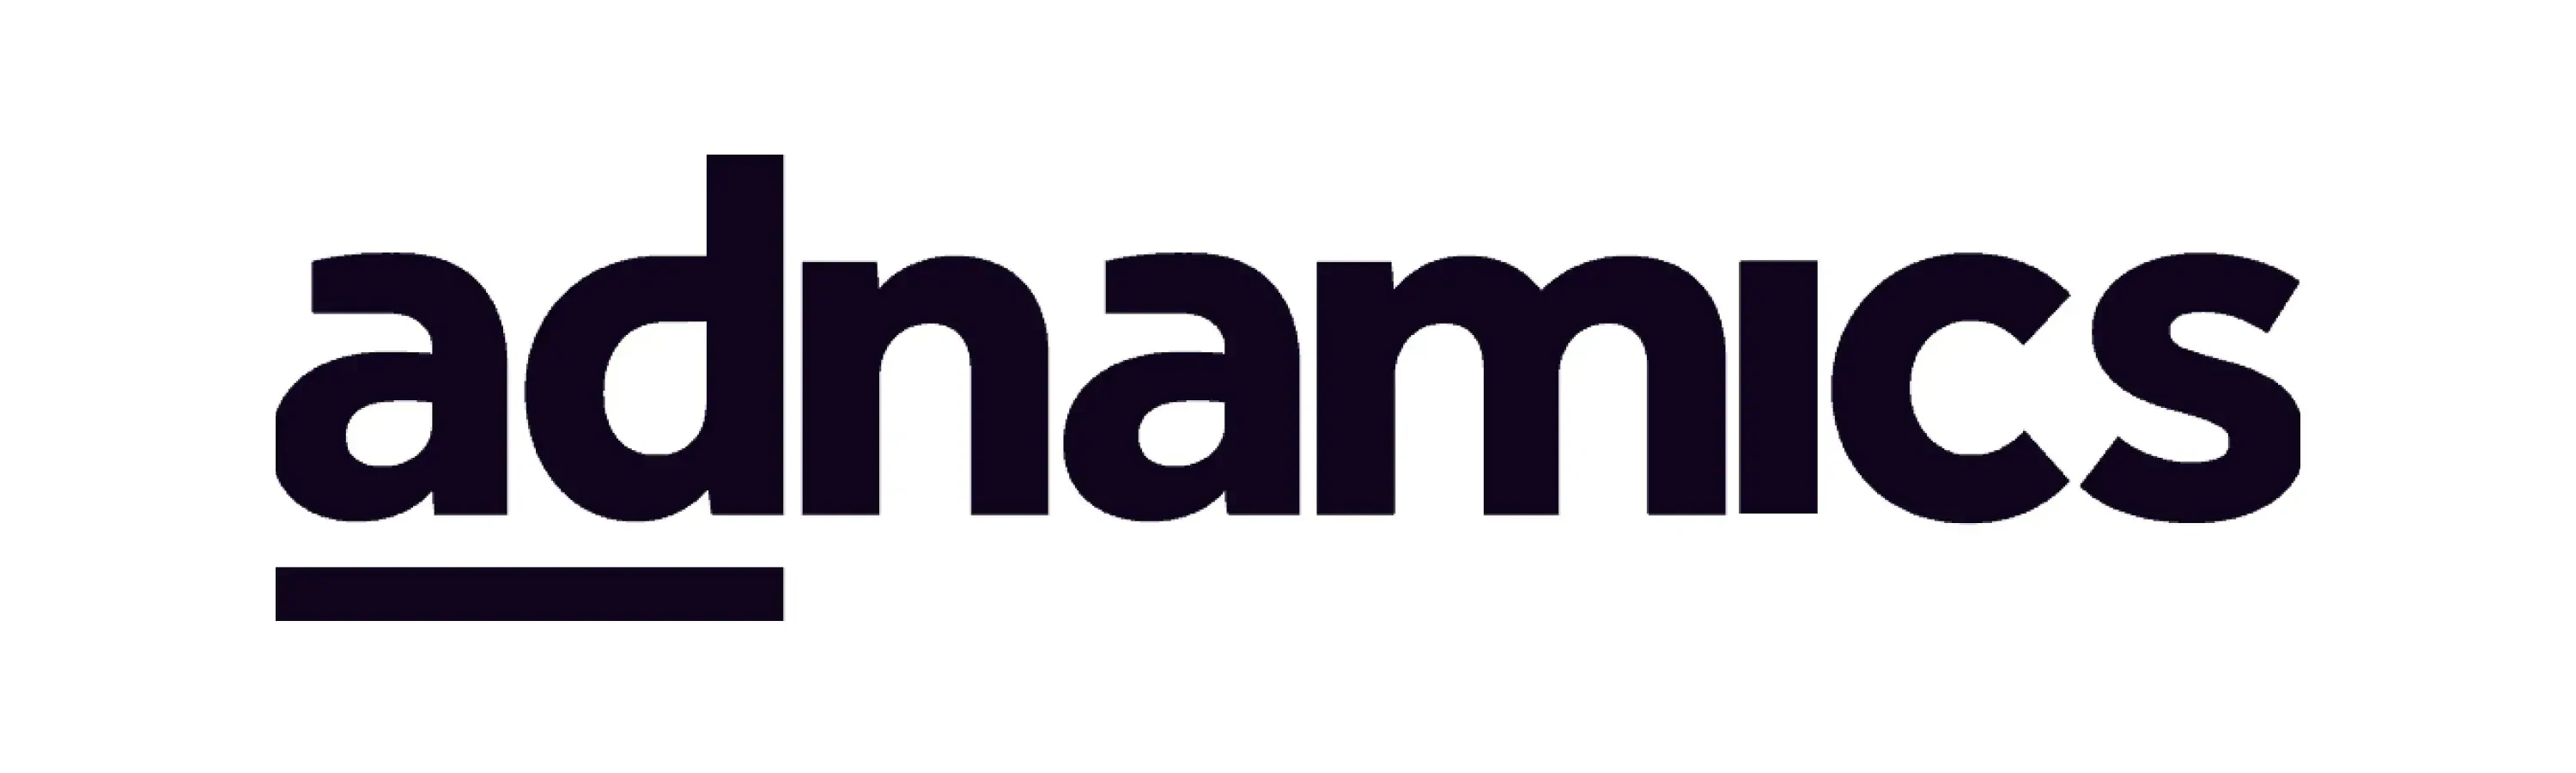 Logo Adnamics